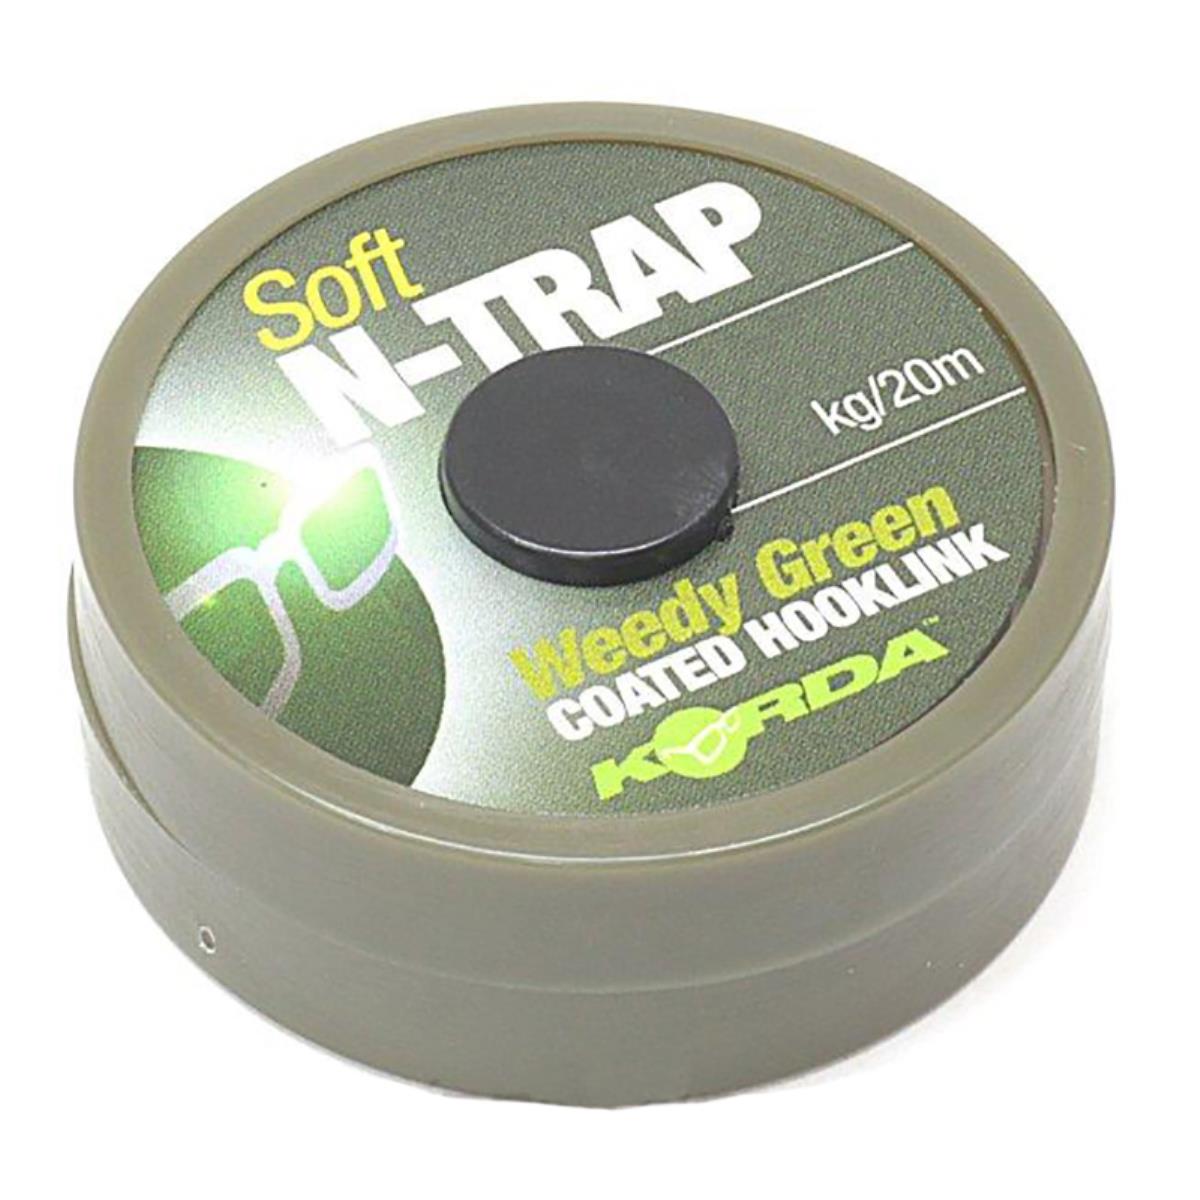 Поводковый материал N-Trap Semi-stiff 15lb Weedy Green Korda green поводок для собак